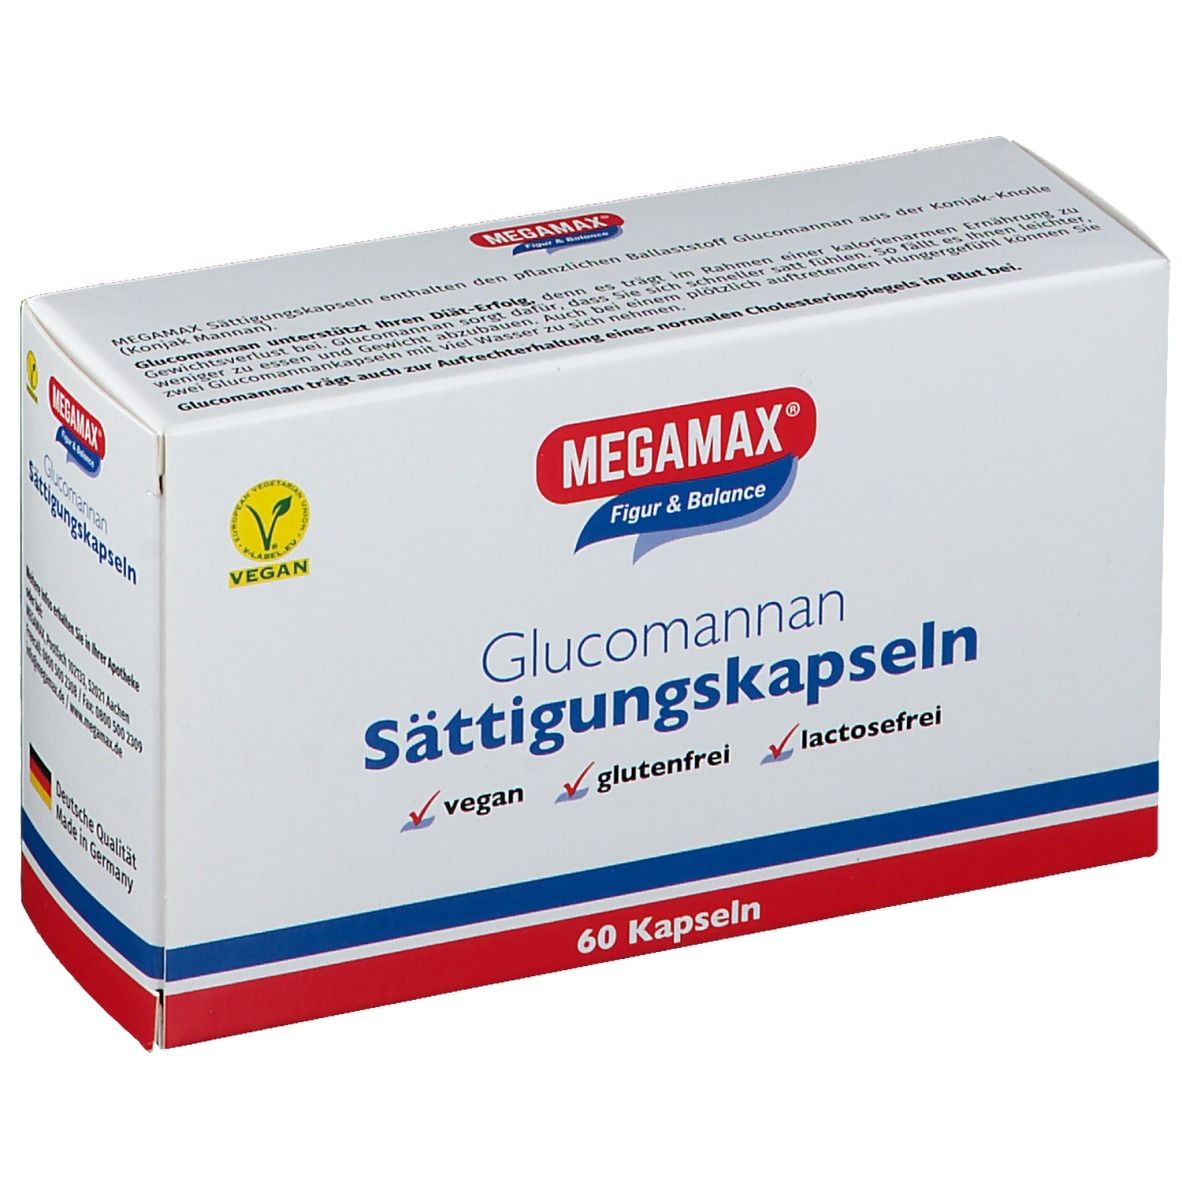 MEGAMAX® Glucomannan Sättigungskapseln zur Gewichtsreduktion